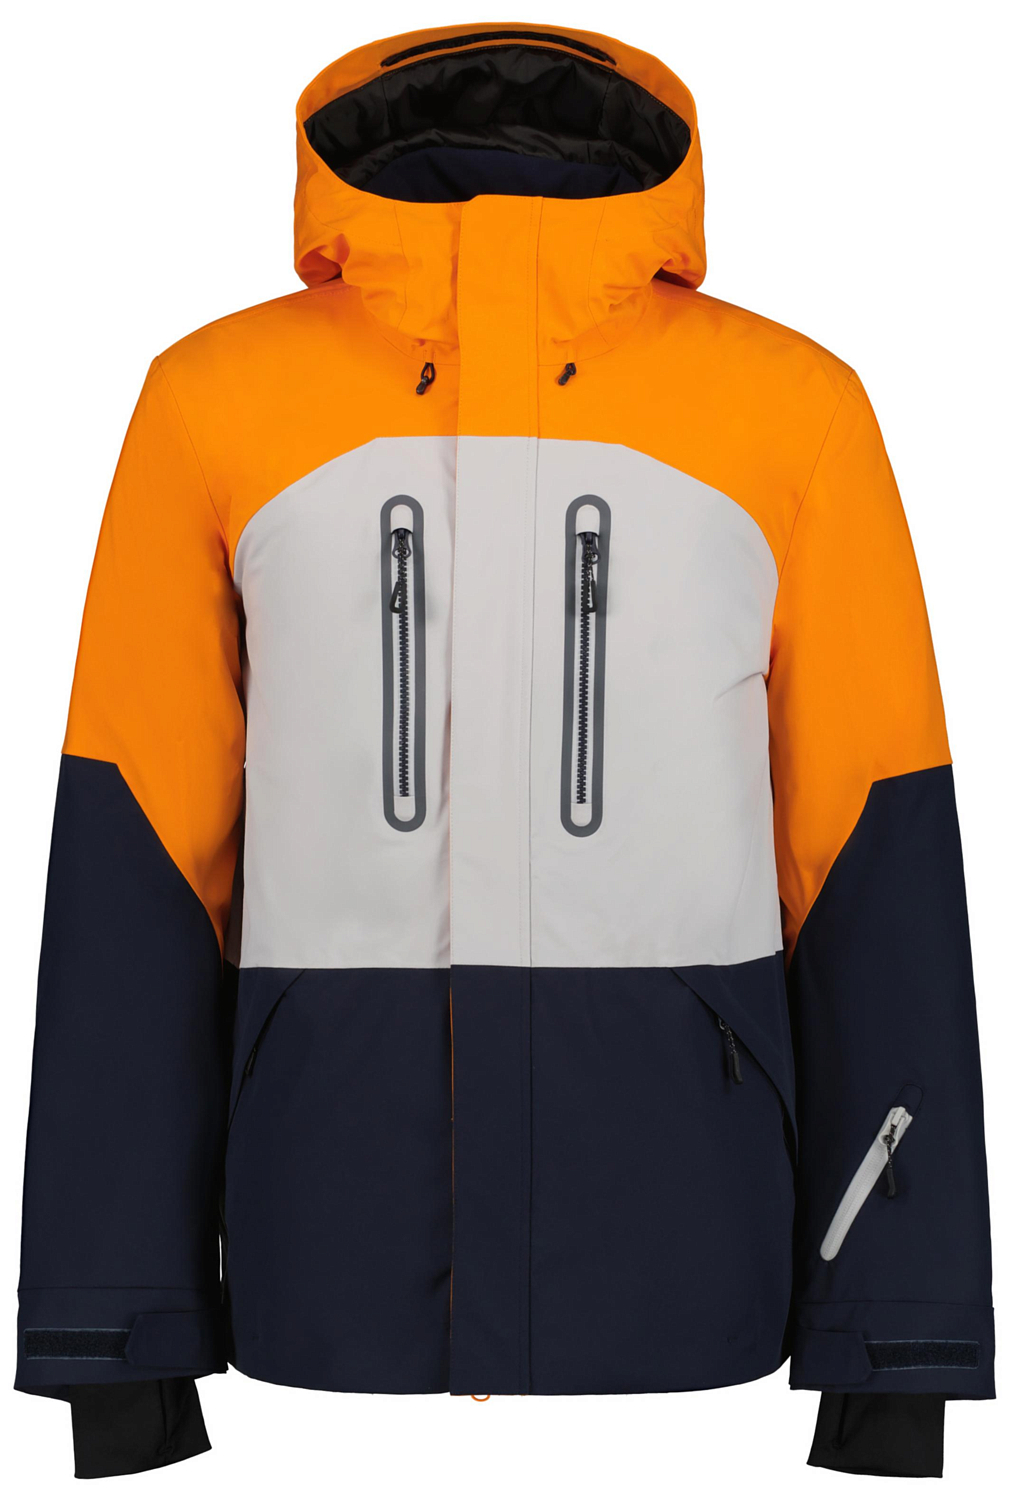 Куртка горнолыжная Icepeak Carbon Dark Orange